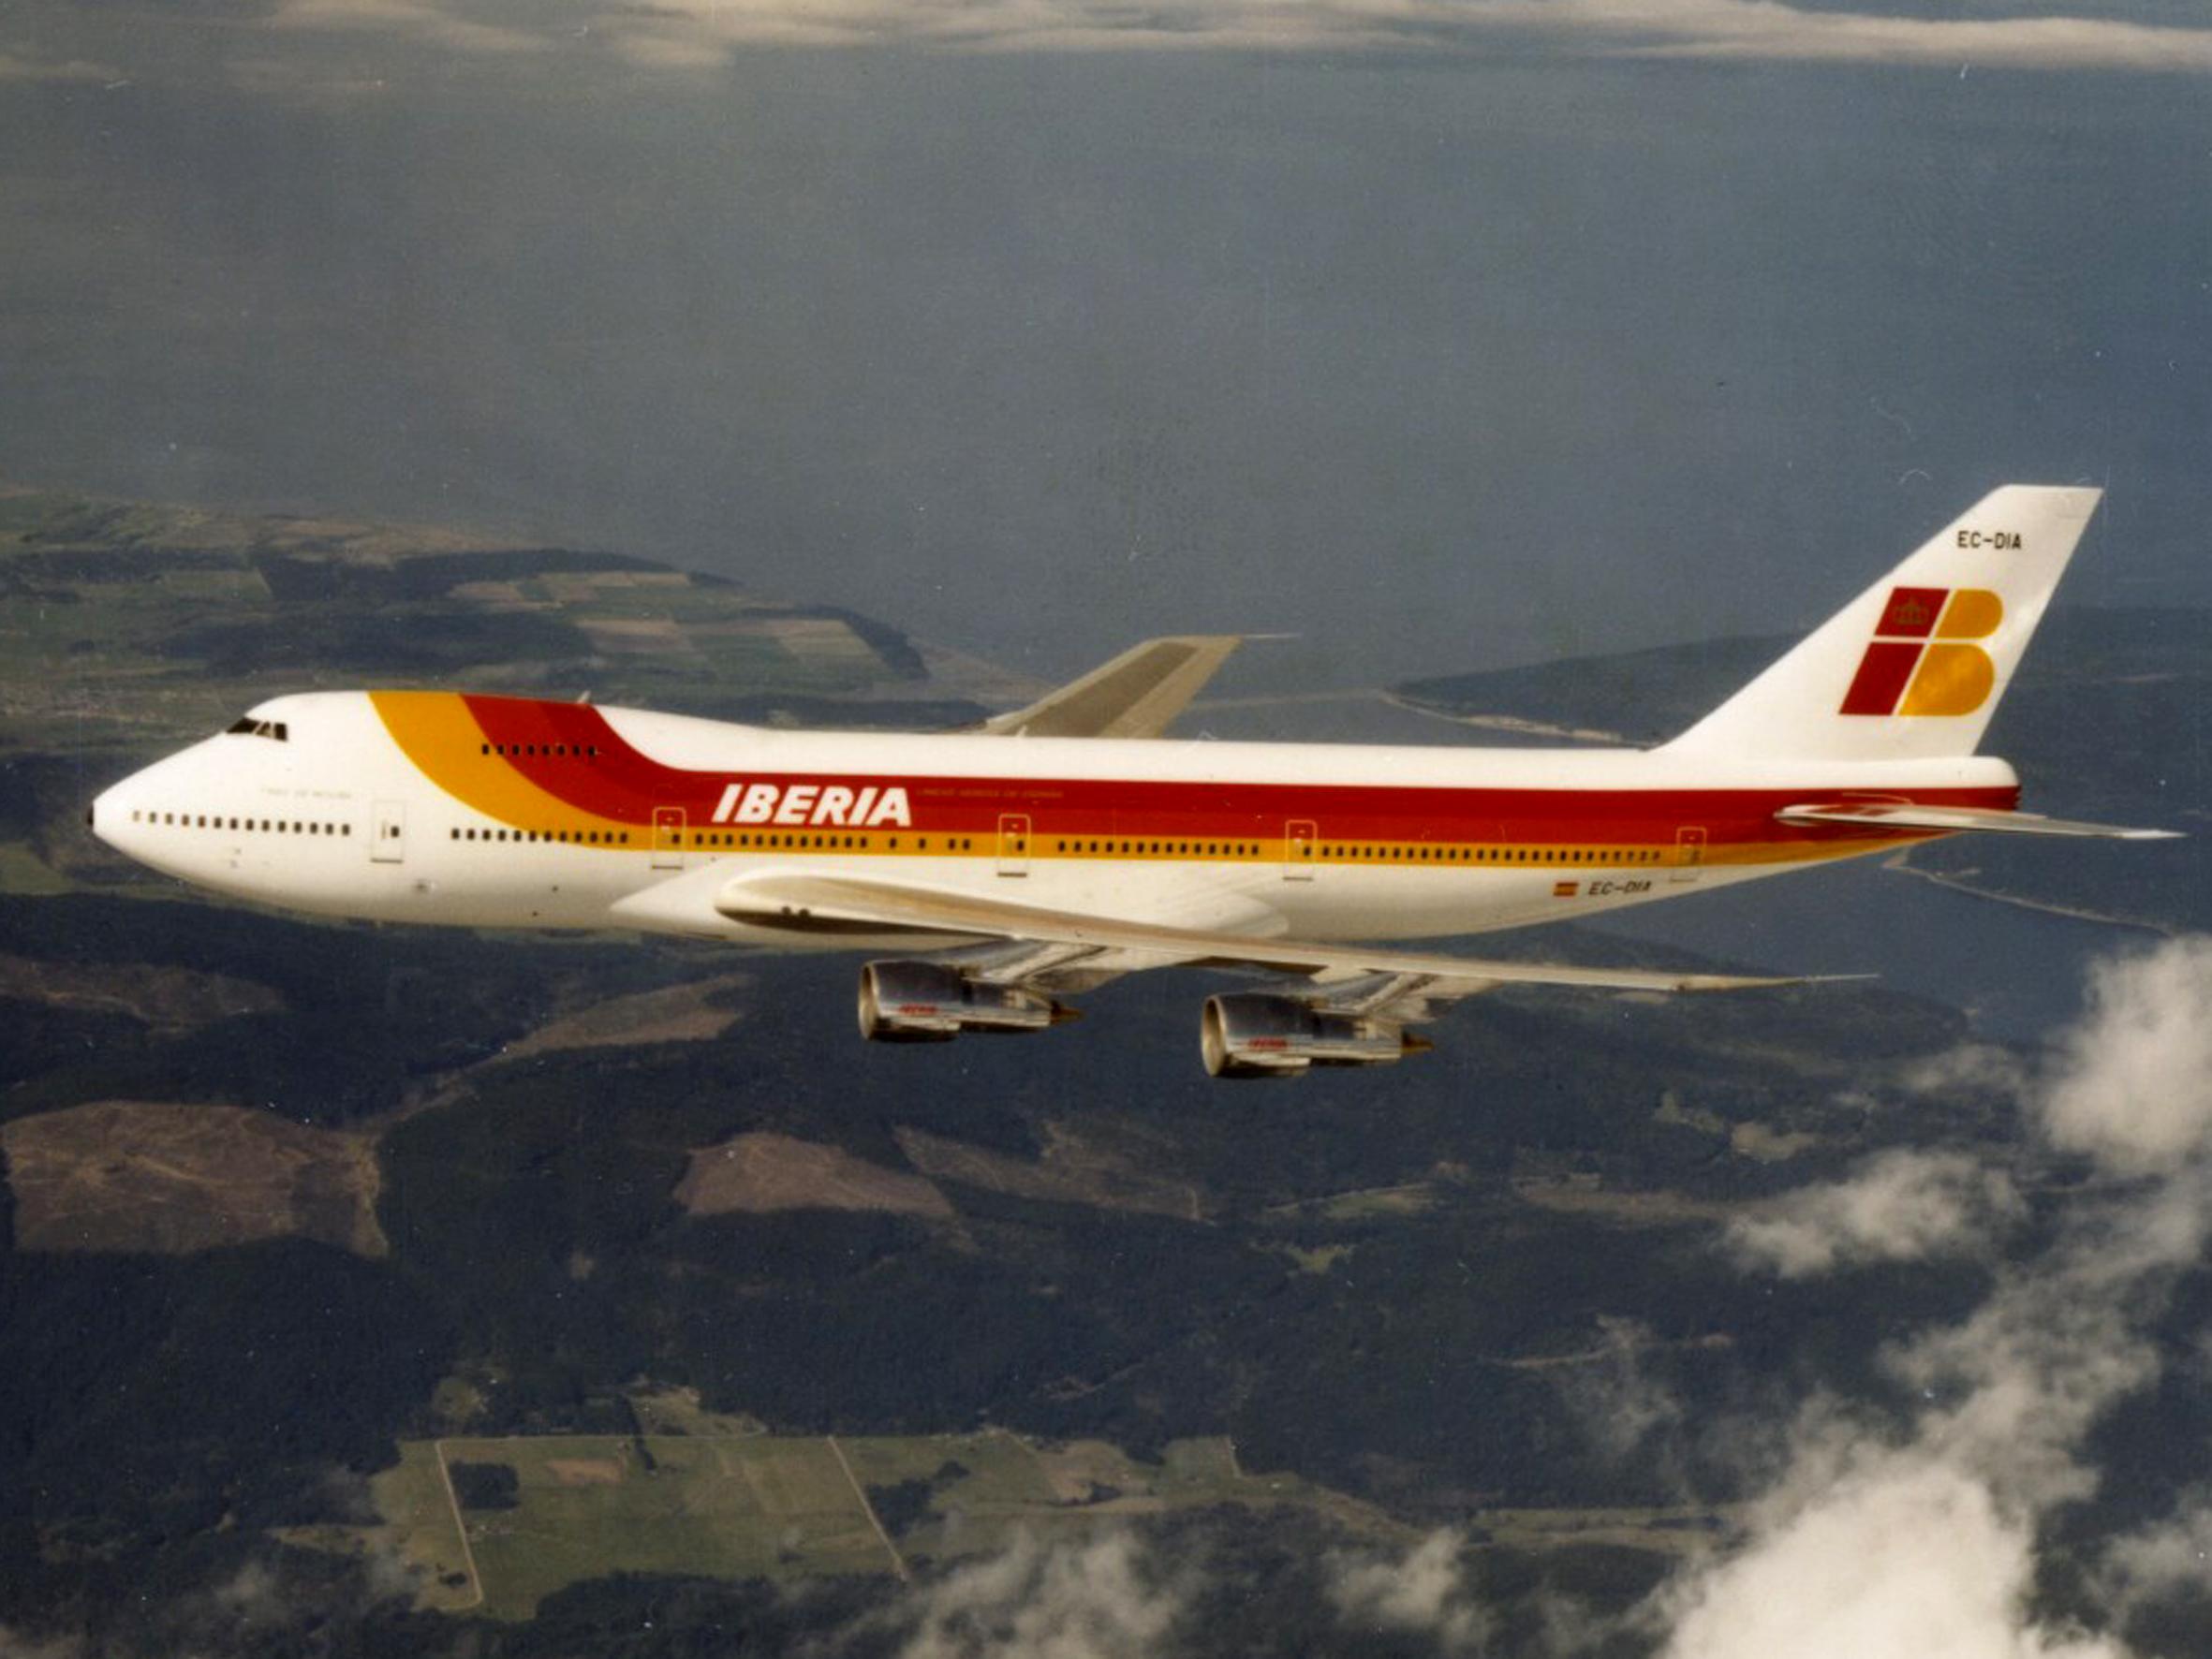 Boeing 747 - Wikipedia